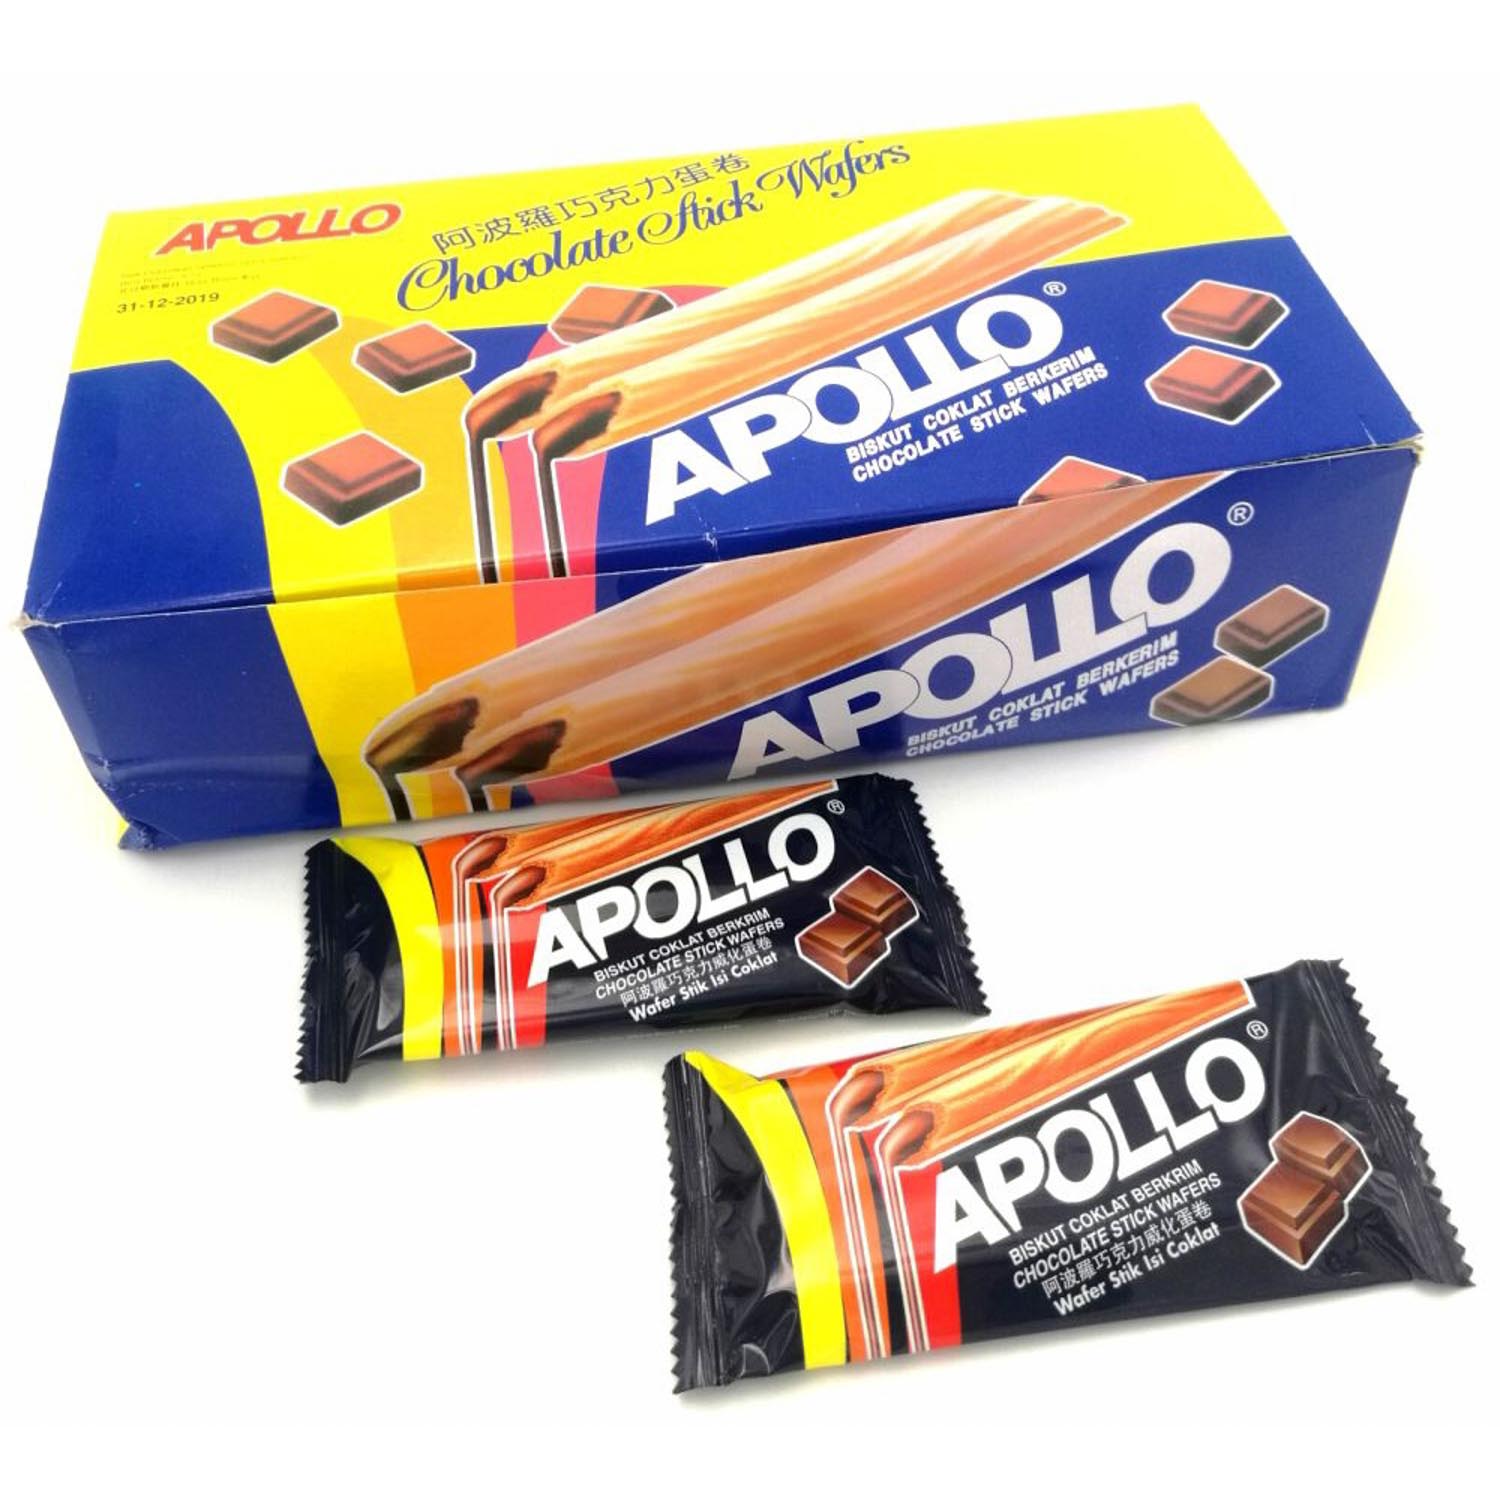 Primary School Snacks - Apollo Wafers